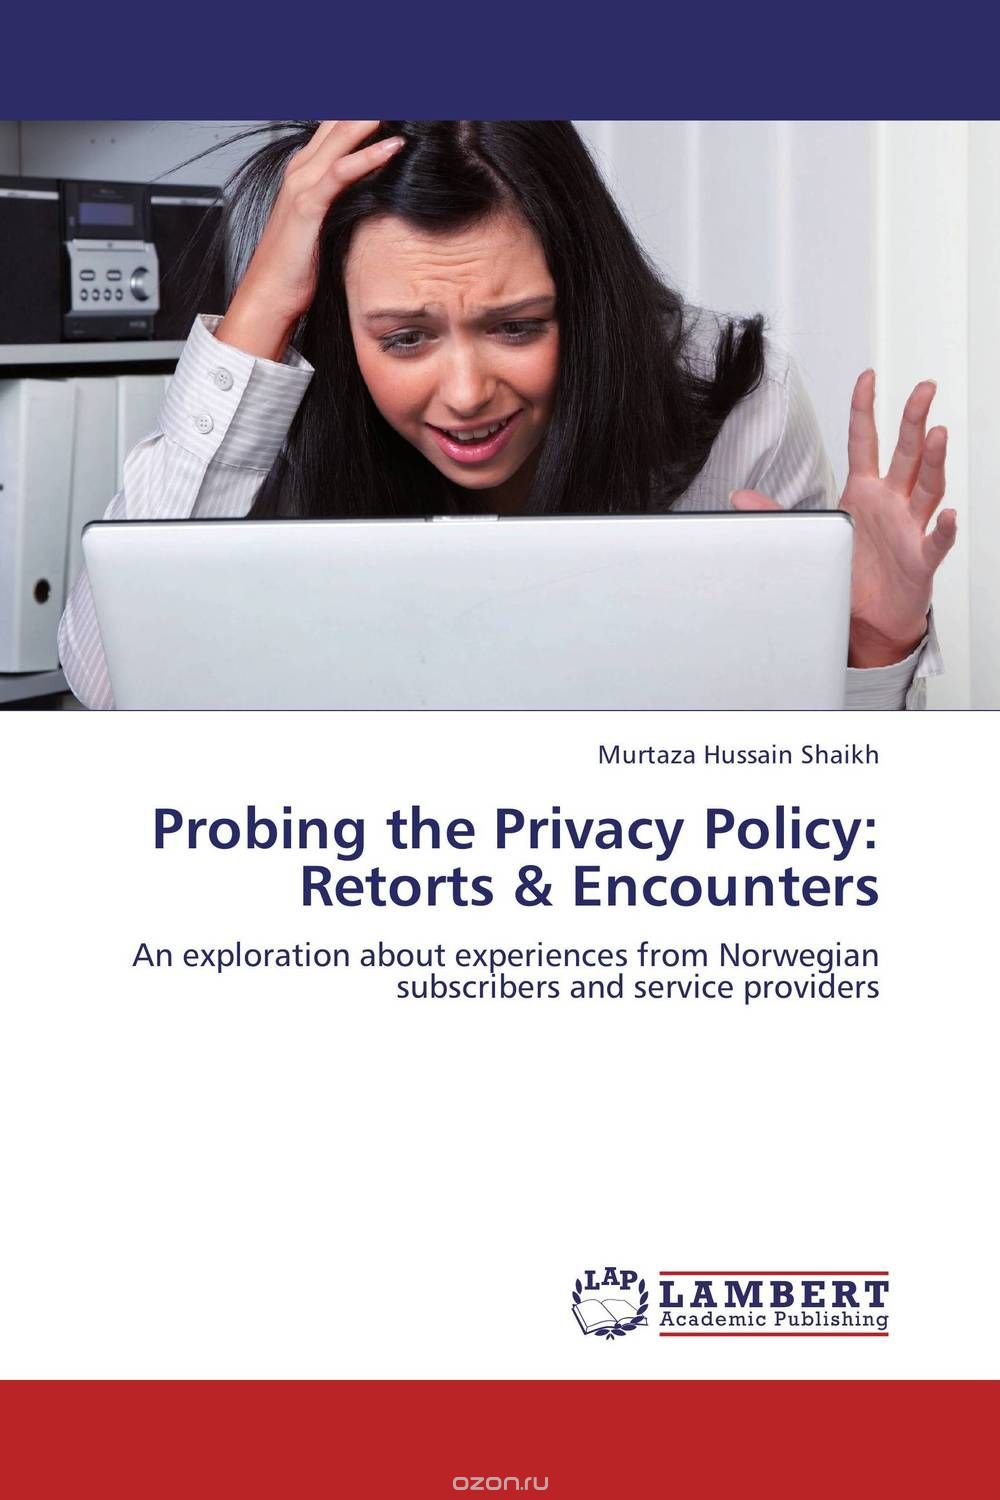 Скачать книгу "Probing the Privacy Policy: Retorts & Encounters"